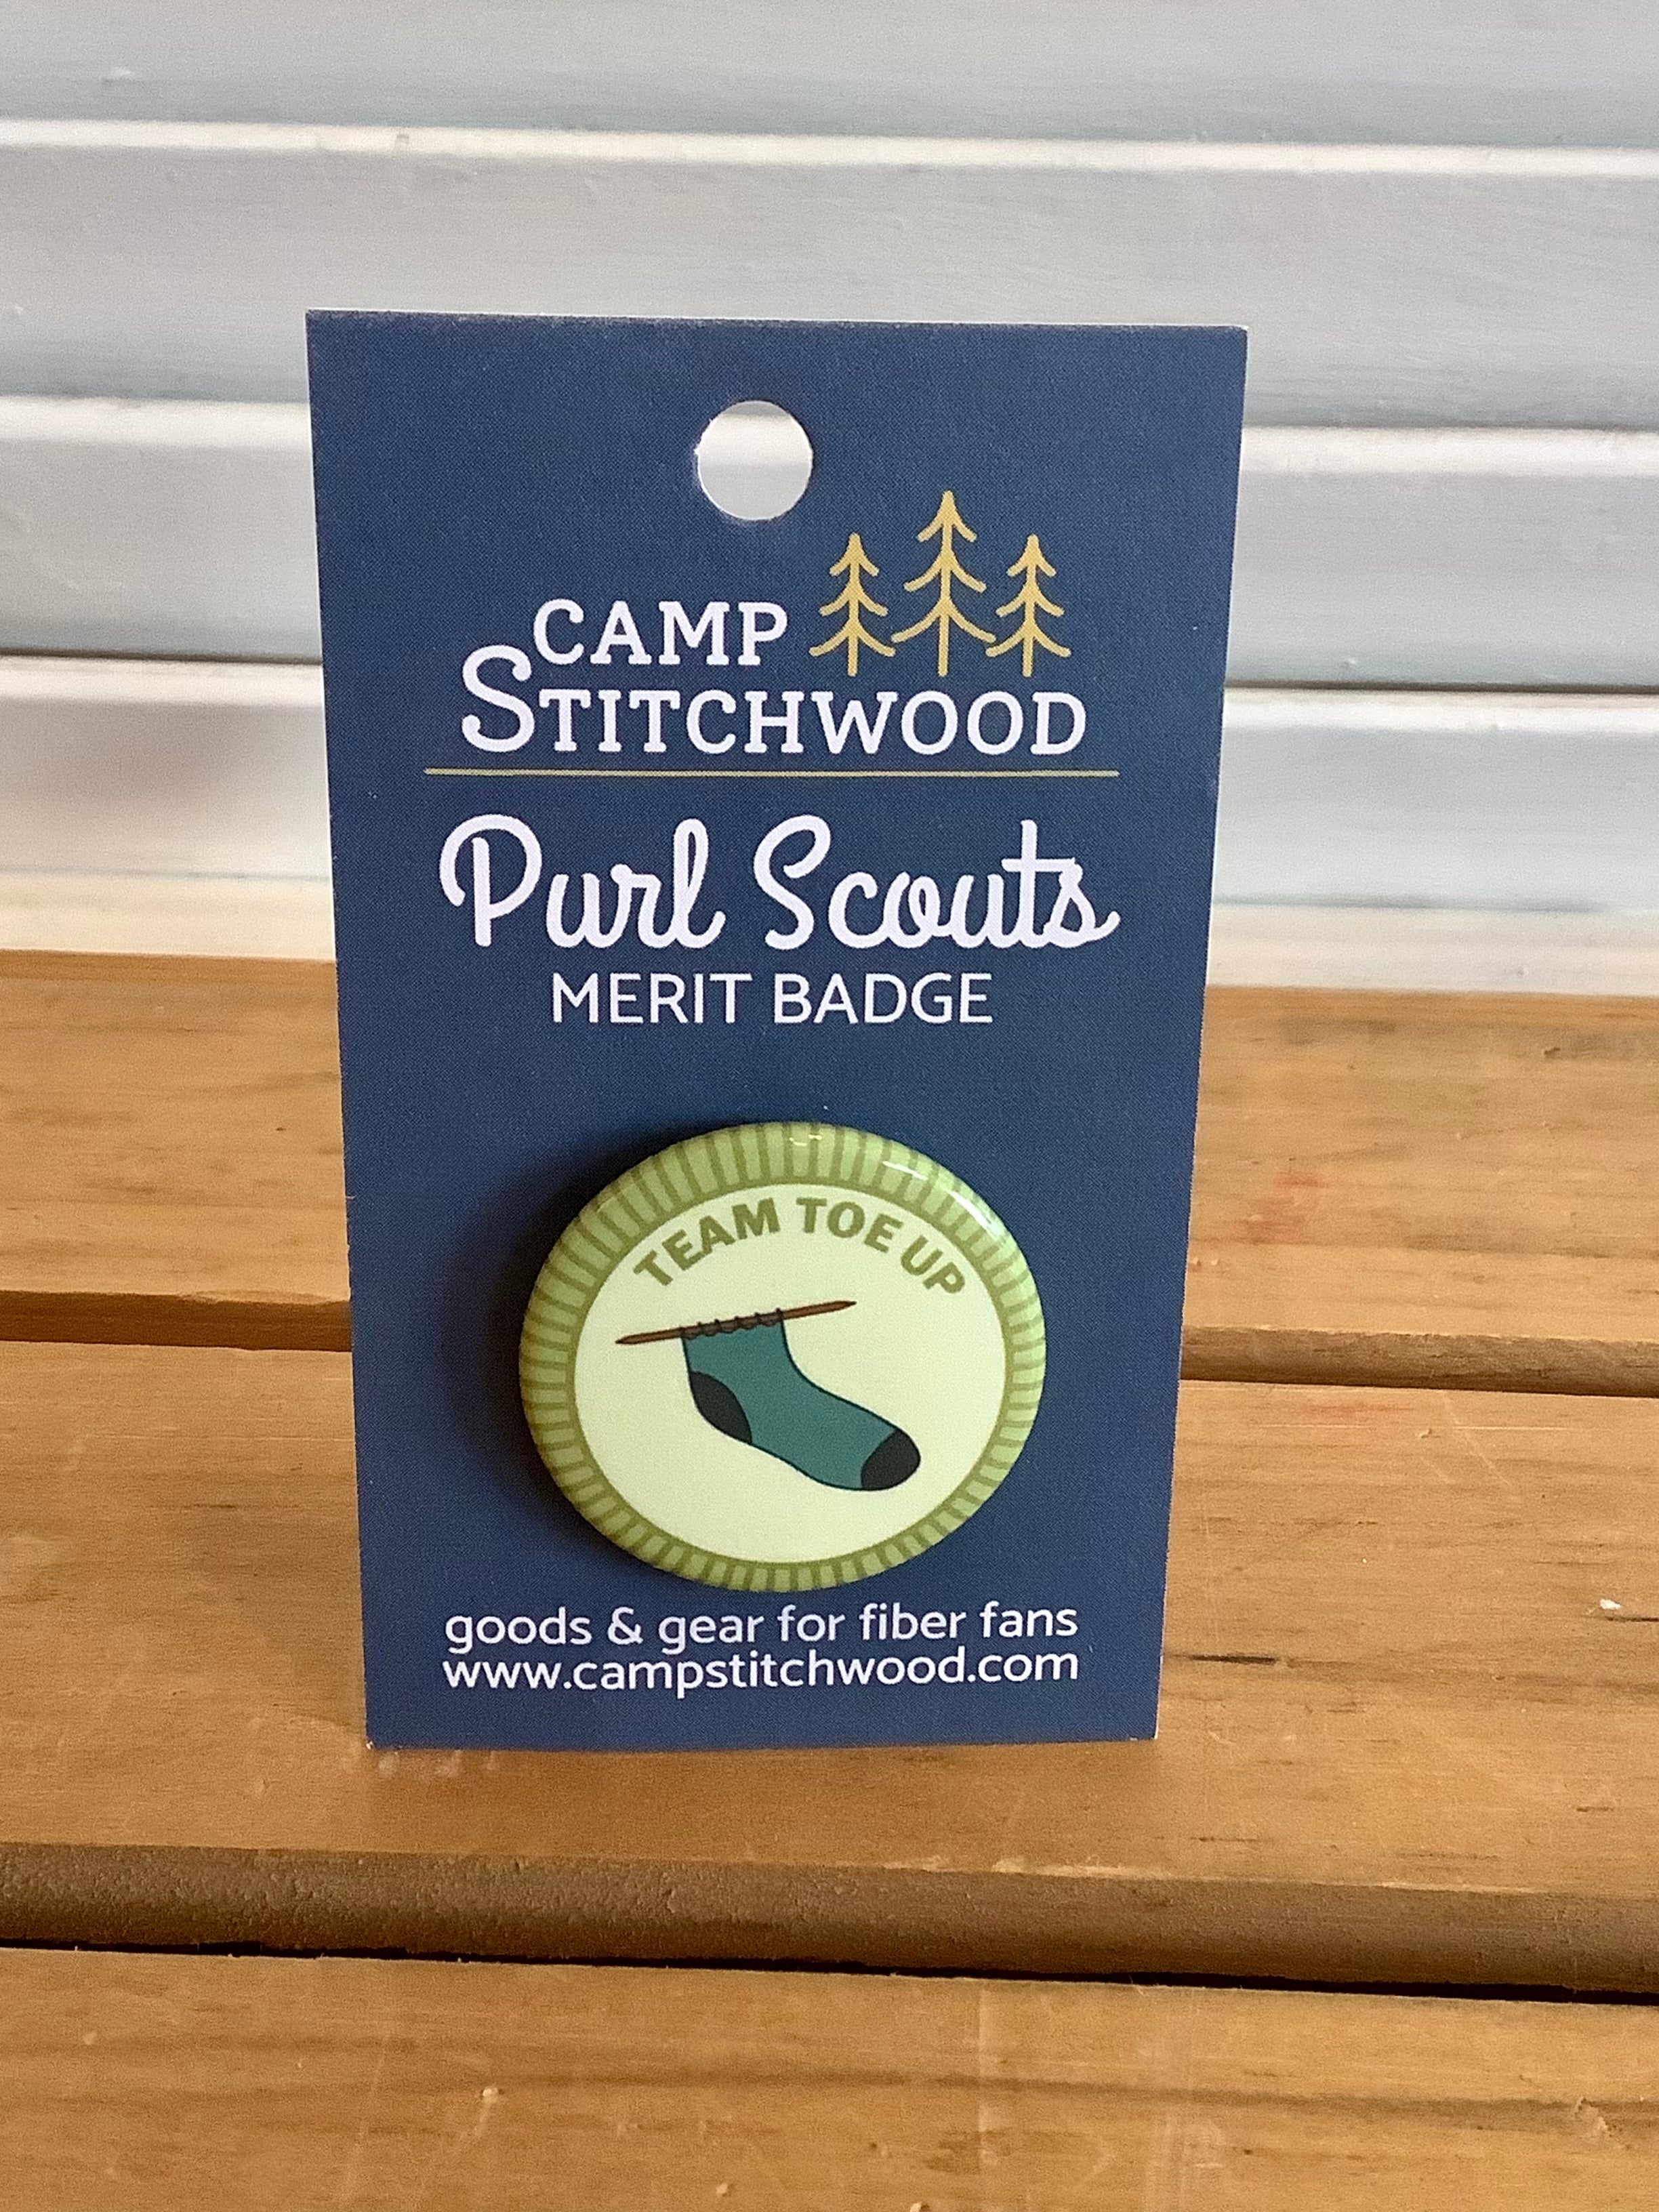 Team Toe Up - Purl Scouts Merit Badge